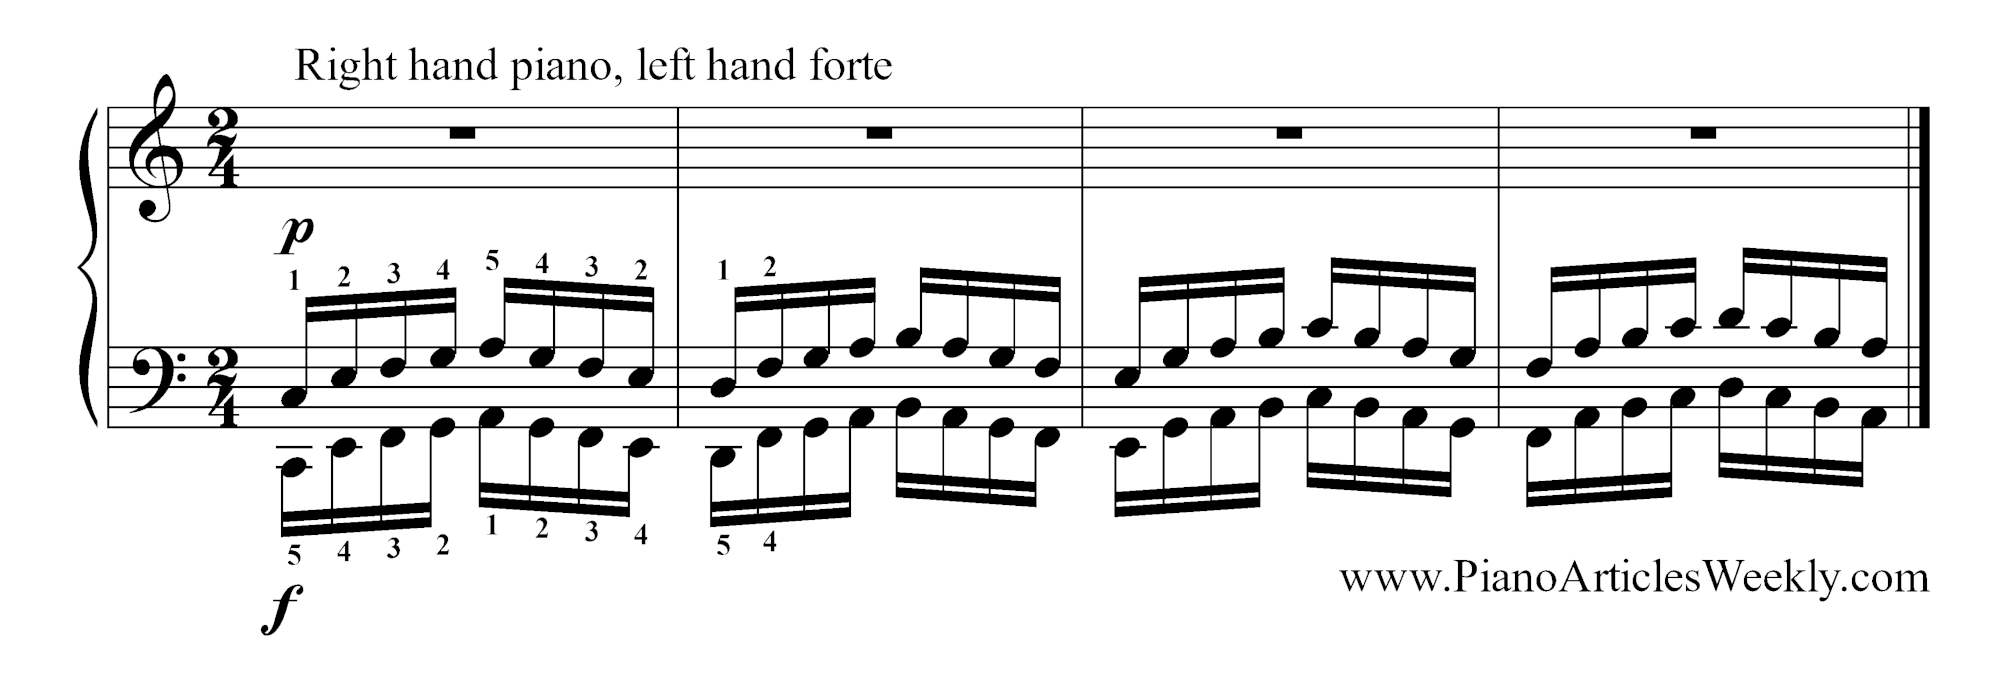 Hanon Exercise - right hand piano, left hand forte